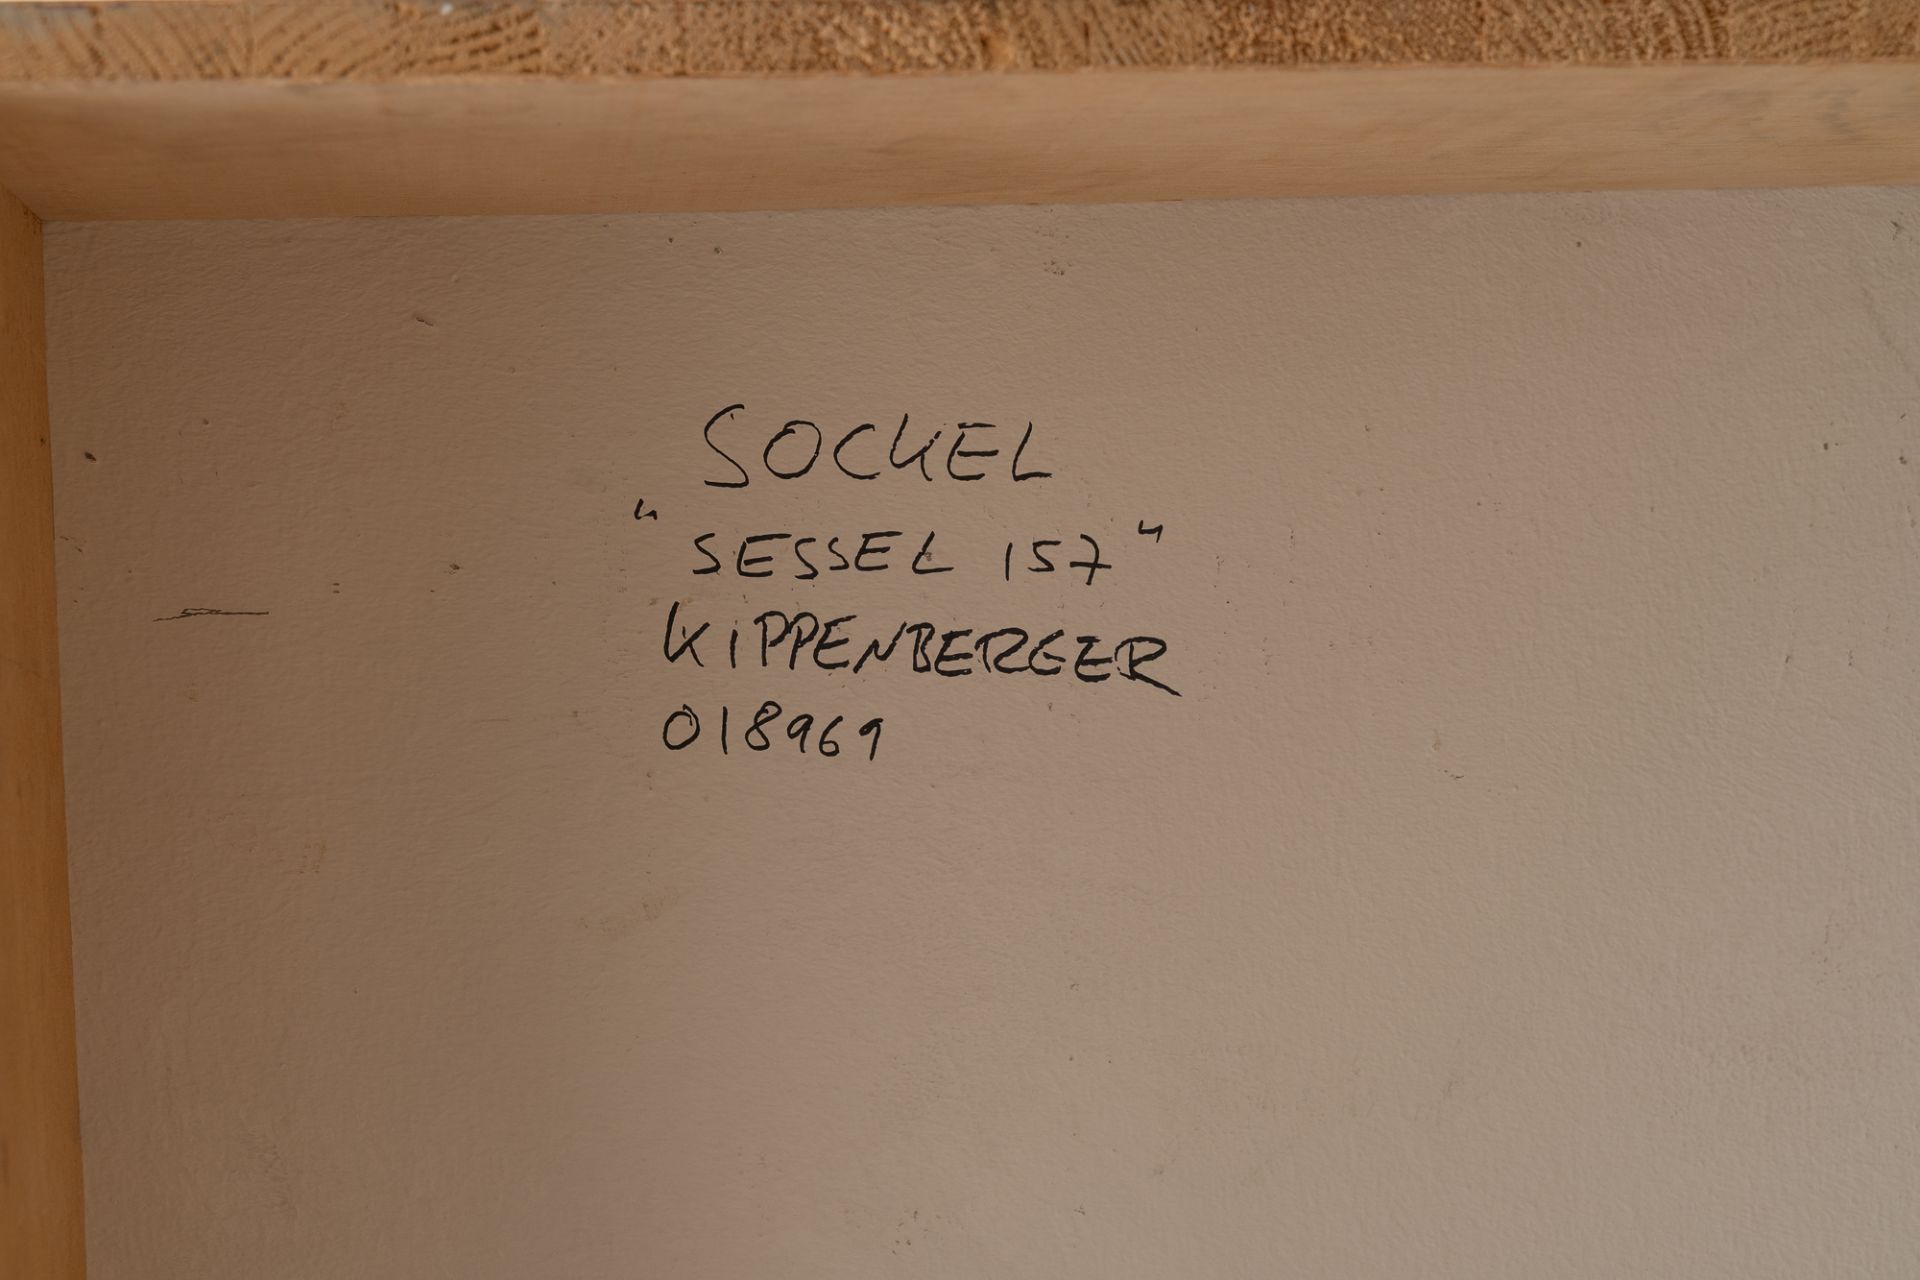 Martin Kippenberger, Untitled (157).Barcelona chair, sticky tape, foil script on wooden plinth. ( - Image 3 of 5